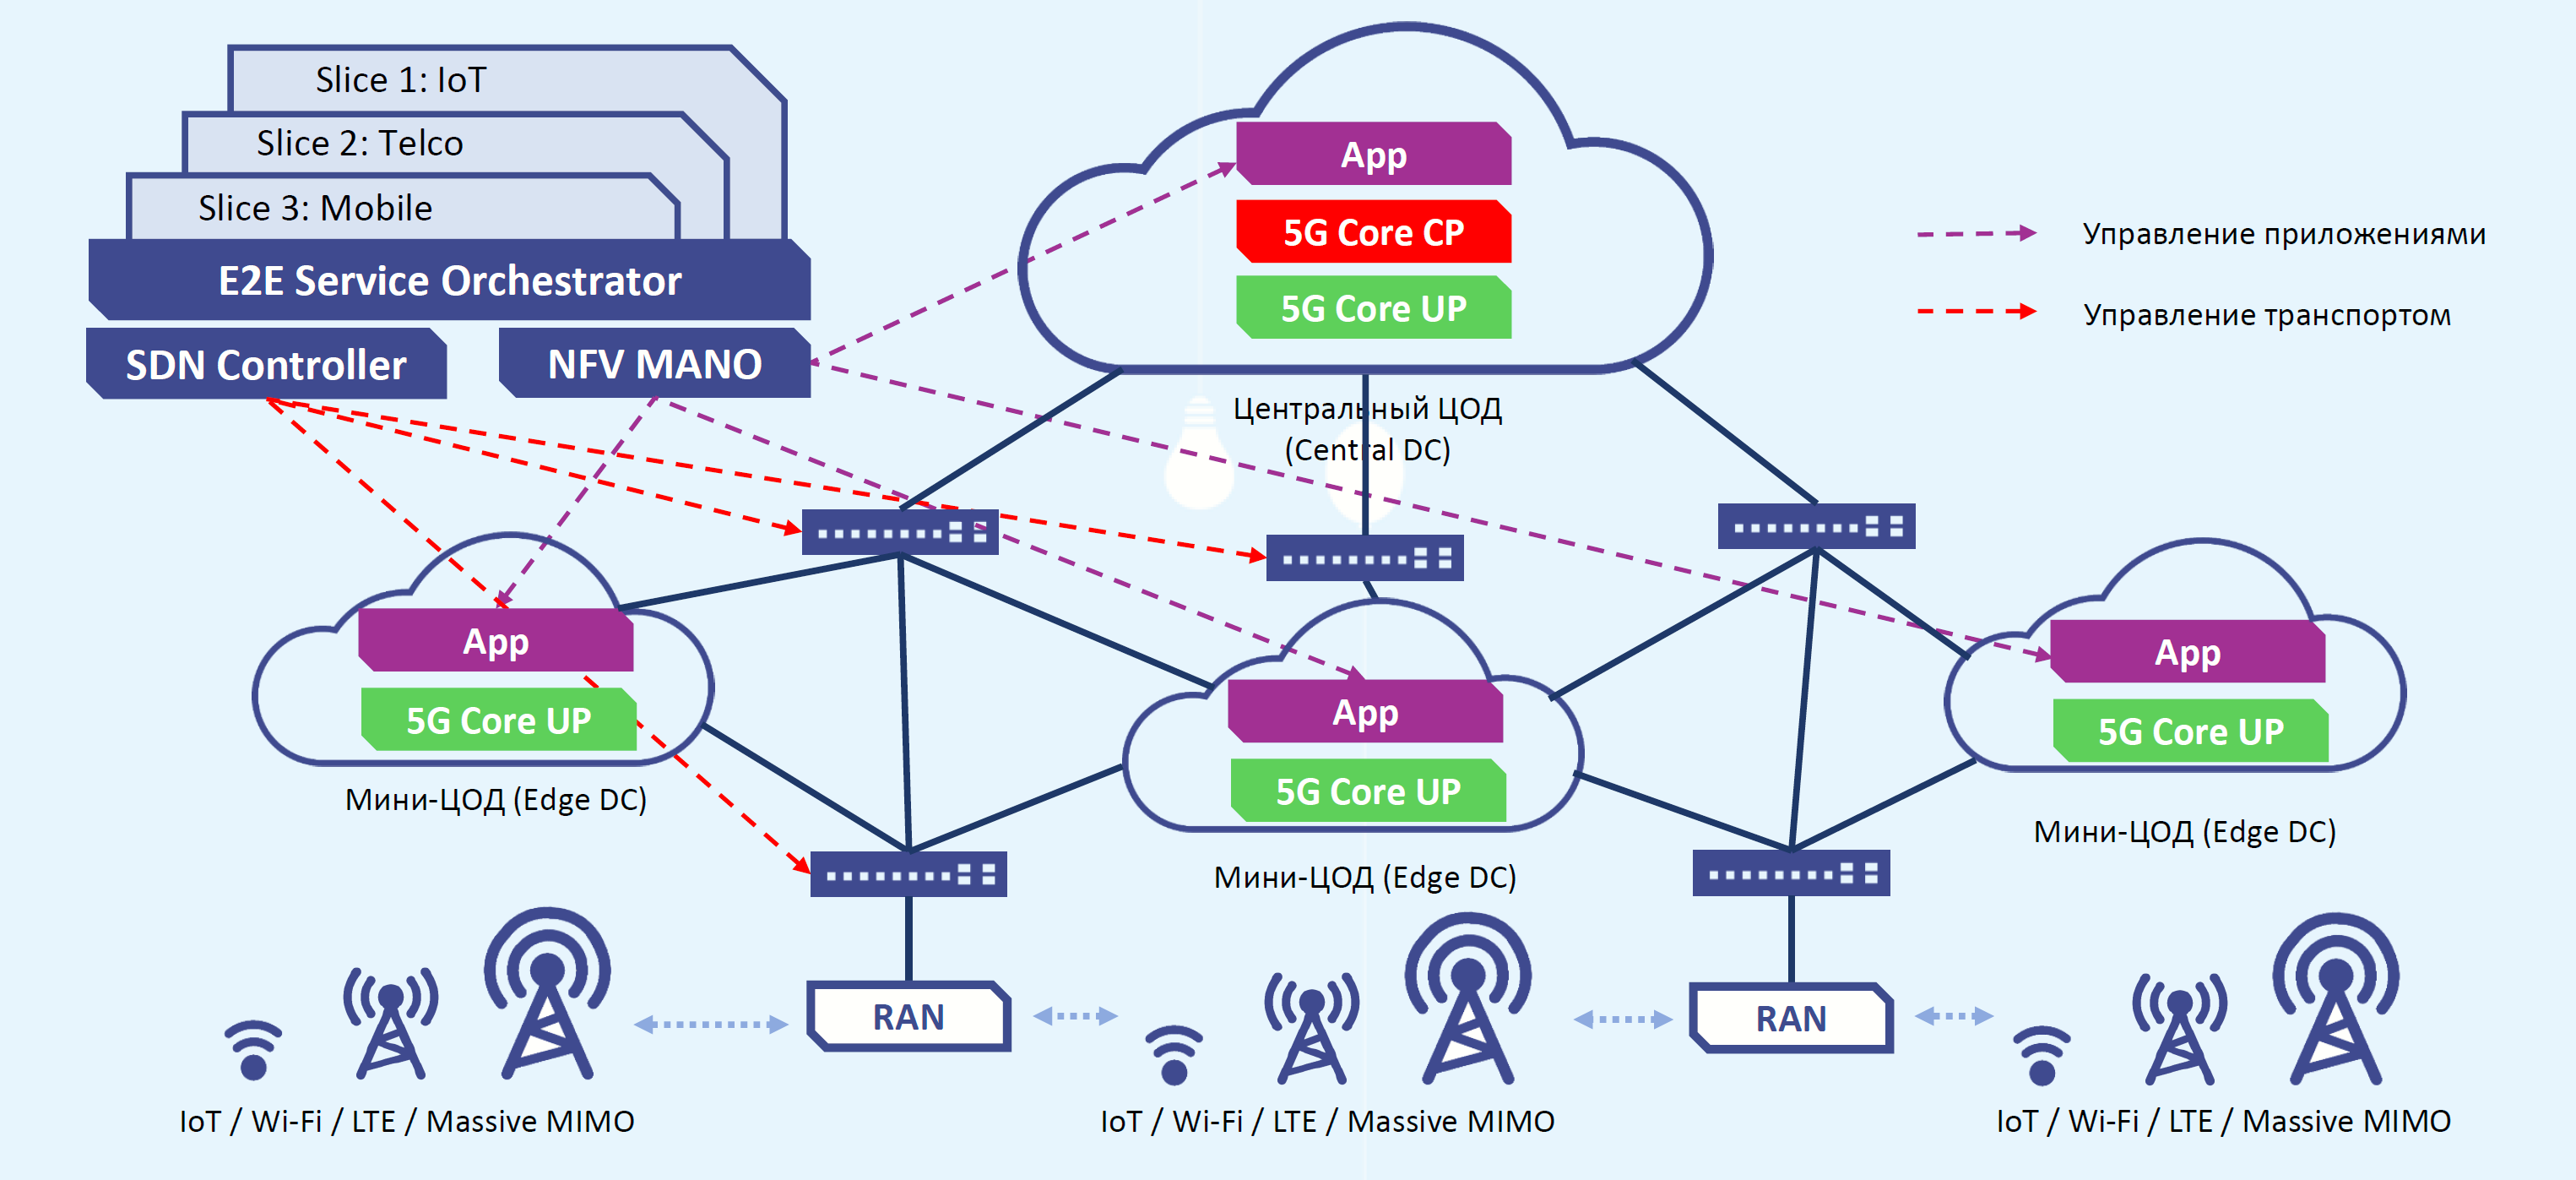 5 п сеть. Схема сети 5g. Архитектура сети 5g. Структура сотовой связи 5g. Архитектура сети 5g NSA.